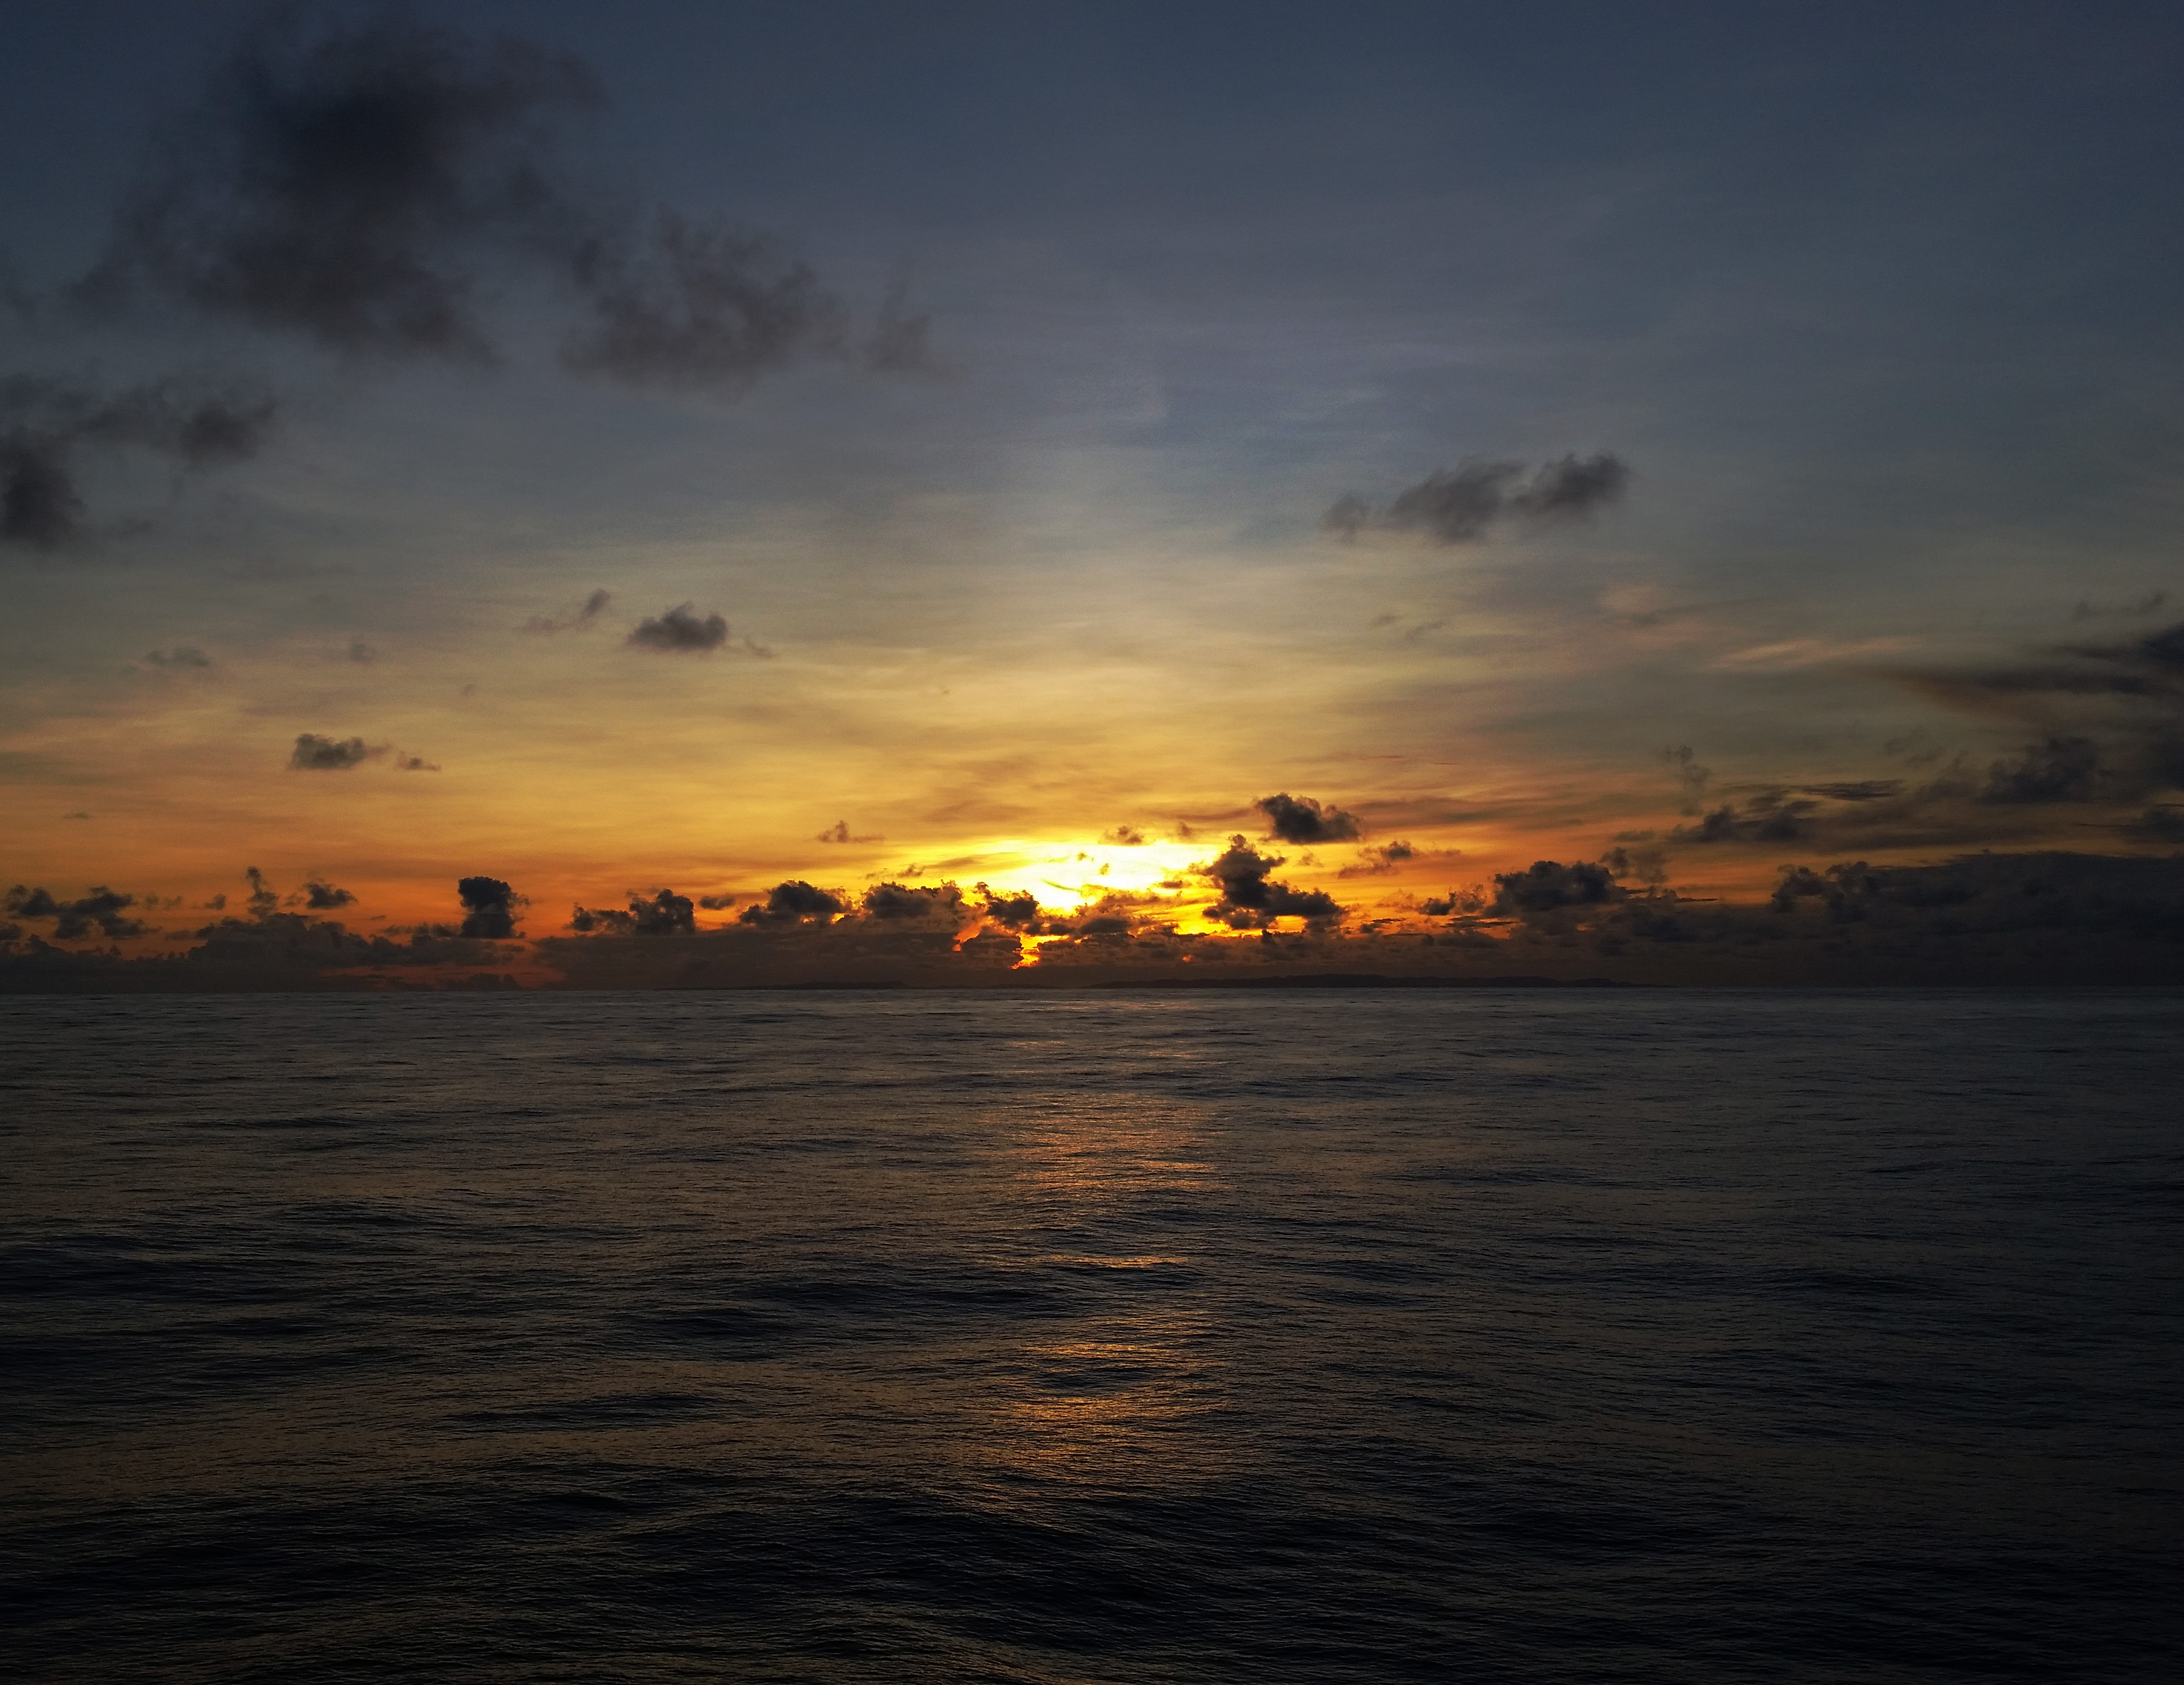 the rising sun over the ocean